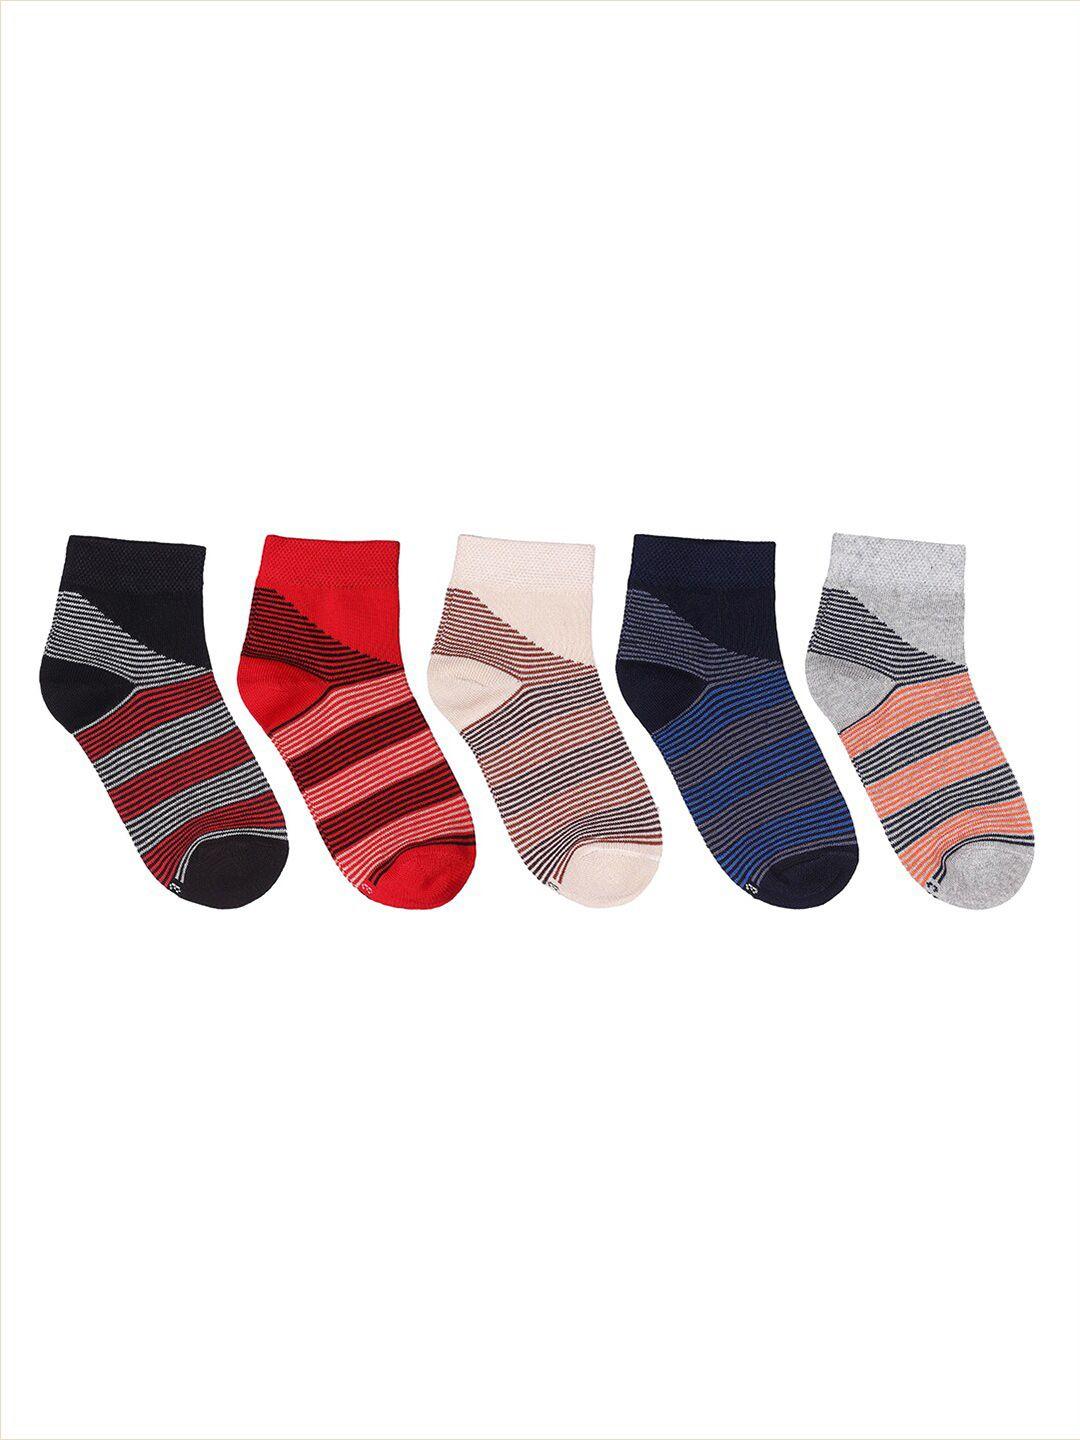 marc boys pack of 5 patterned cotton ankle length socks